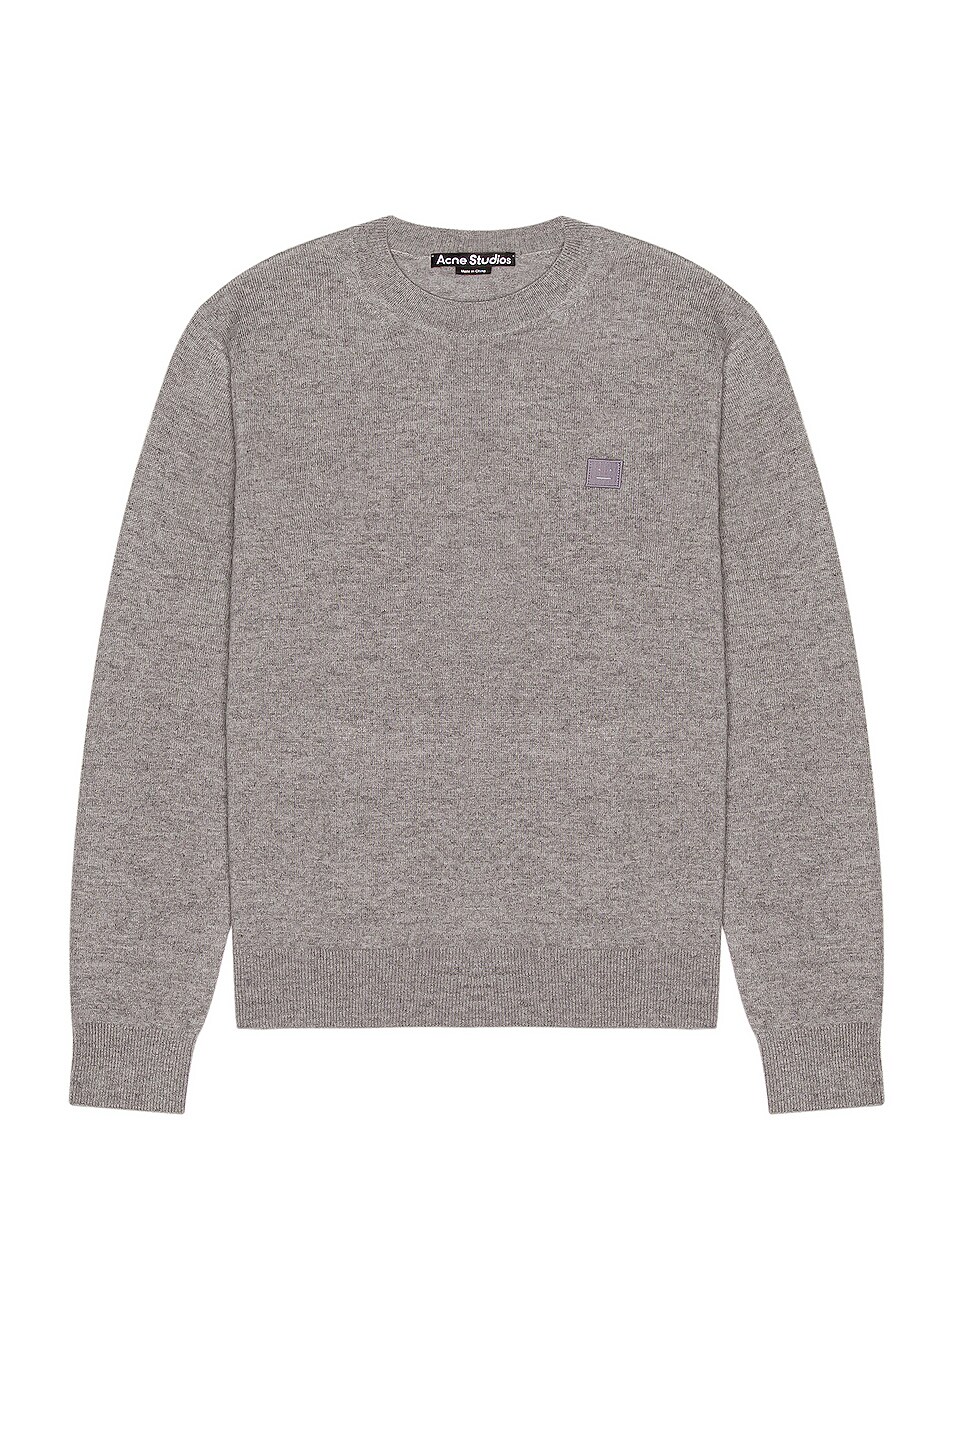 Image 1 of Acne Studios Kalon New Face Sweater in Grey Melange